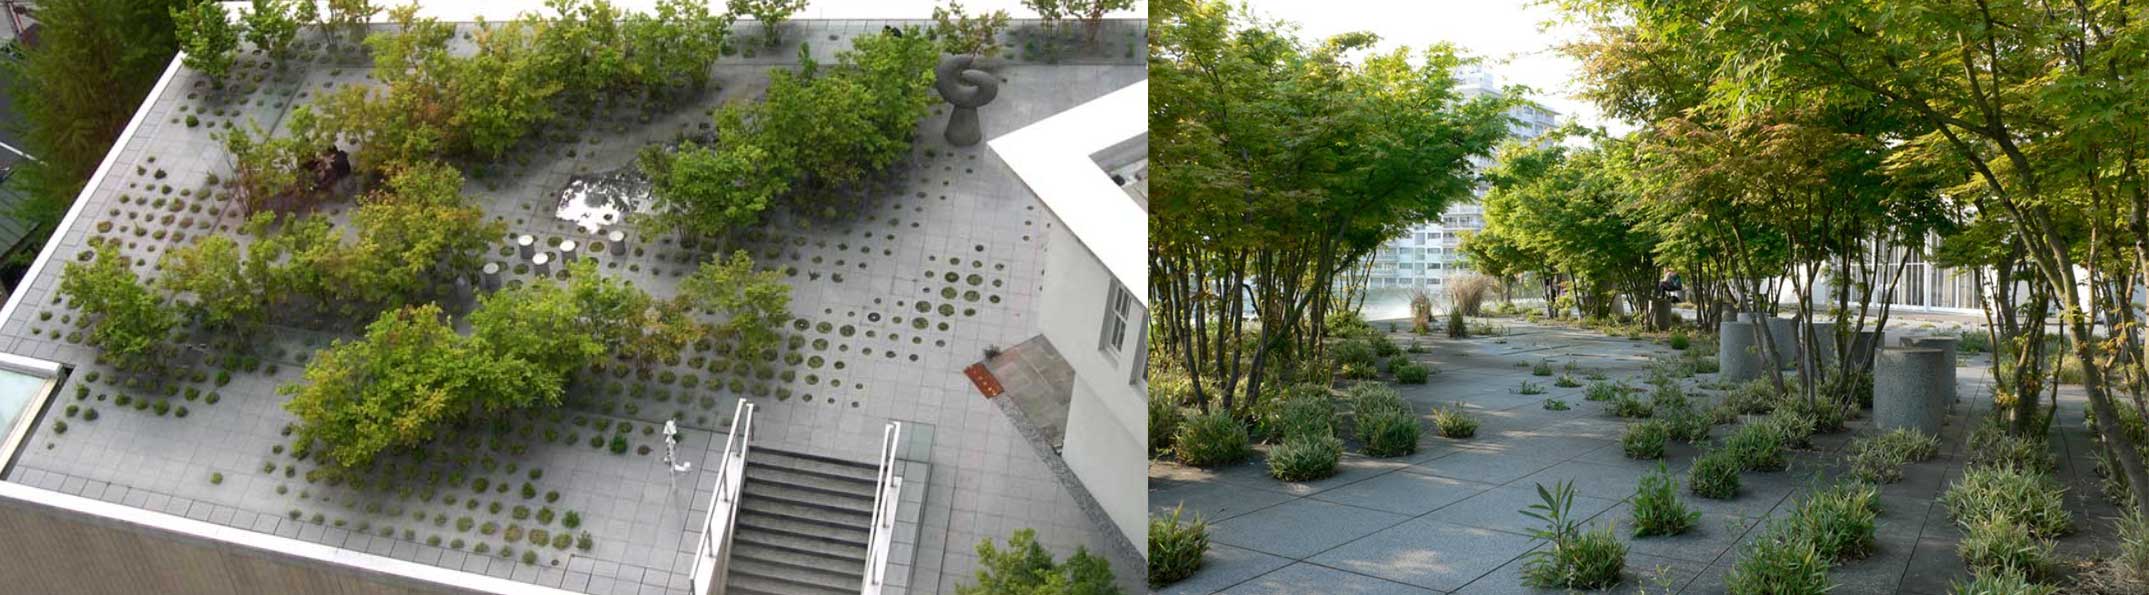 Photographs of the Keio University Roof Garden